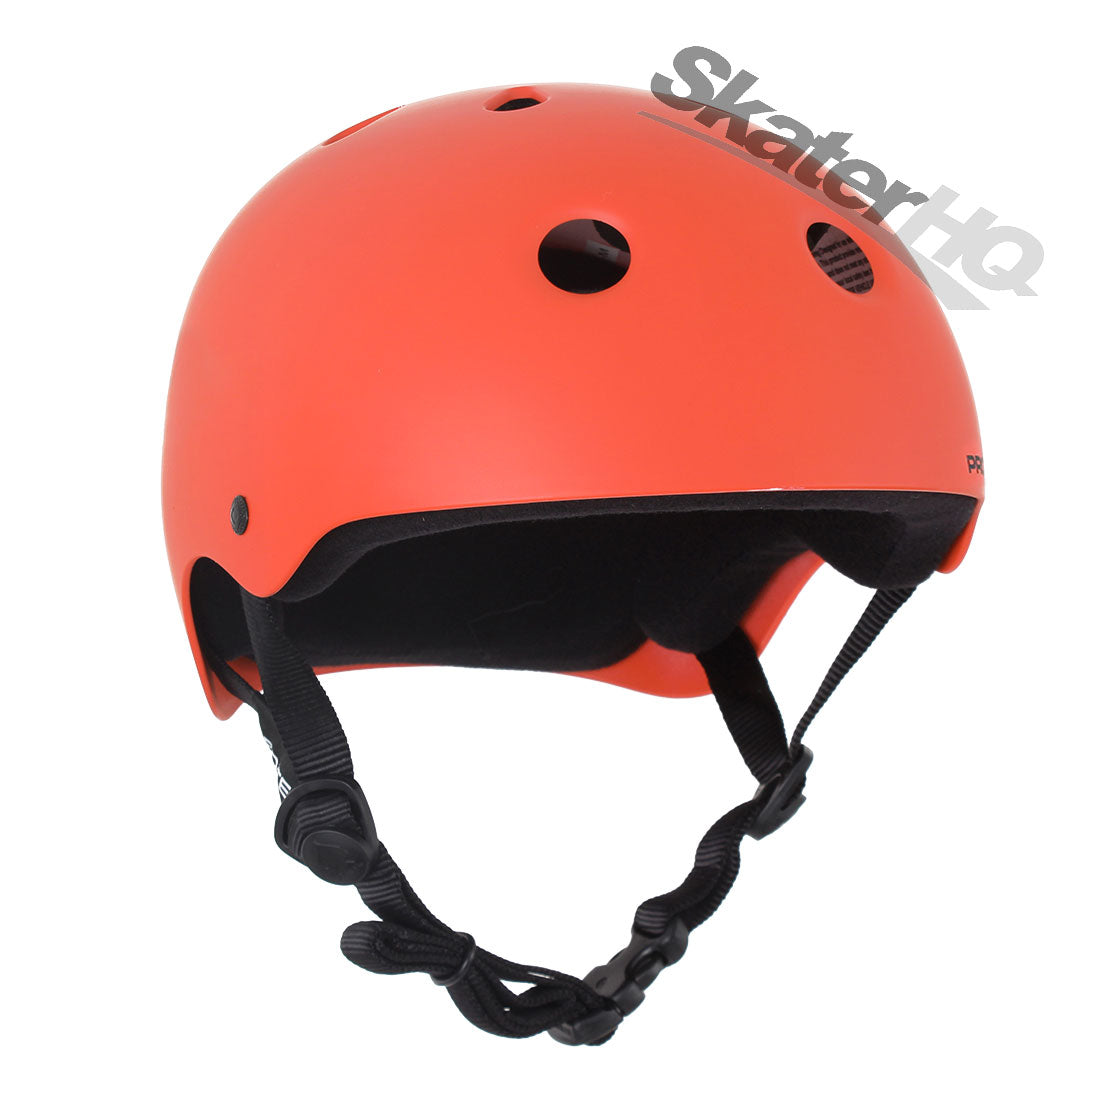 Pro-Tec Classic Skate Matte Bright Red - Small Helmets